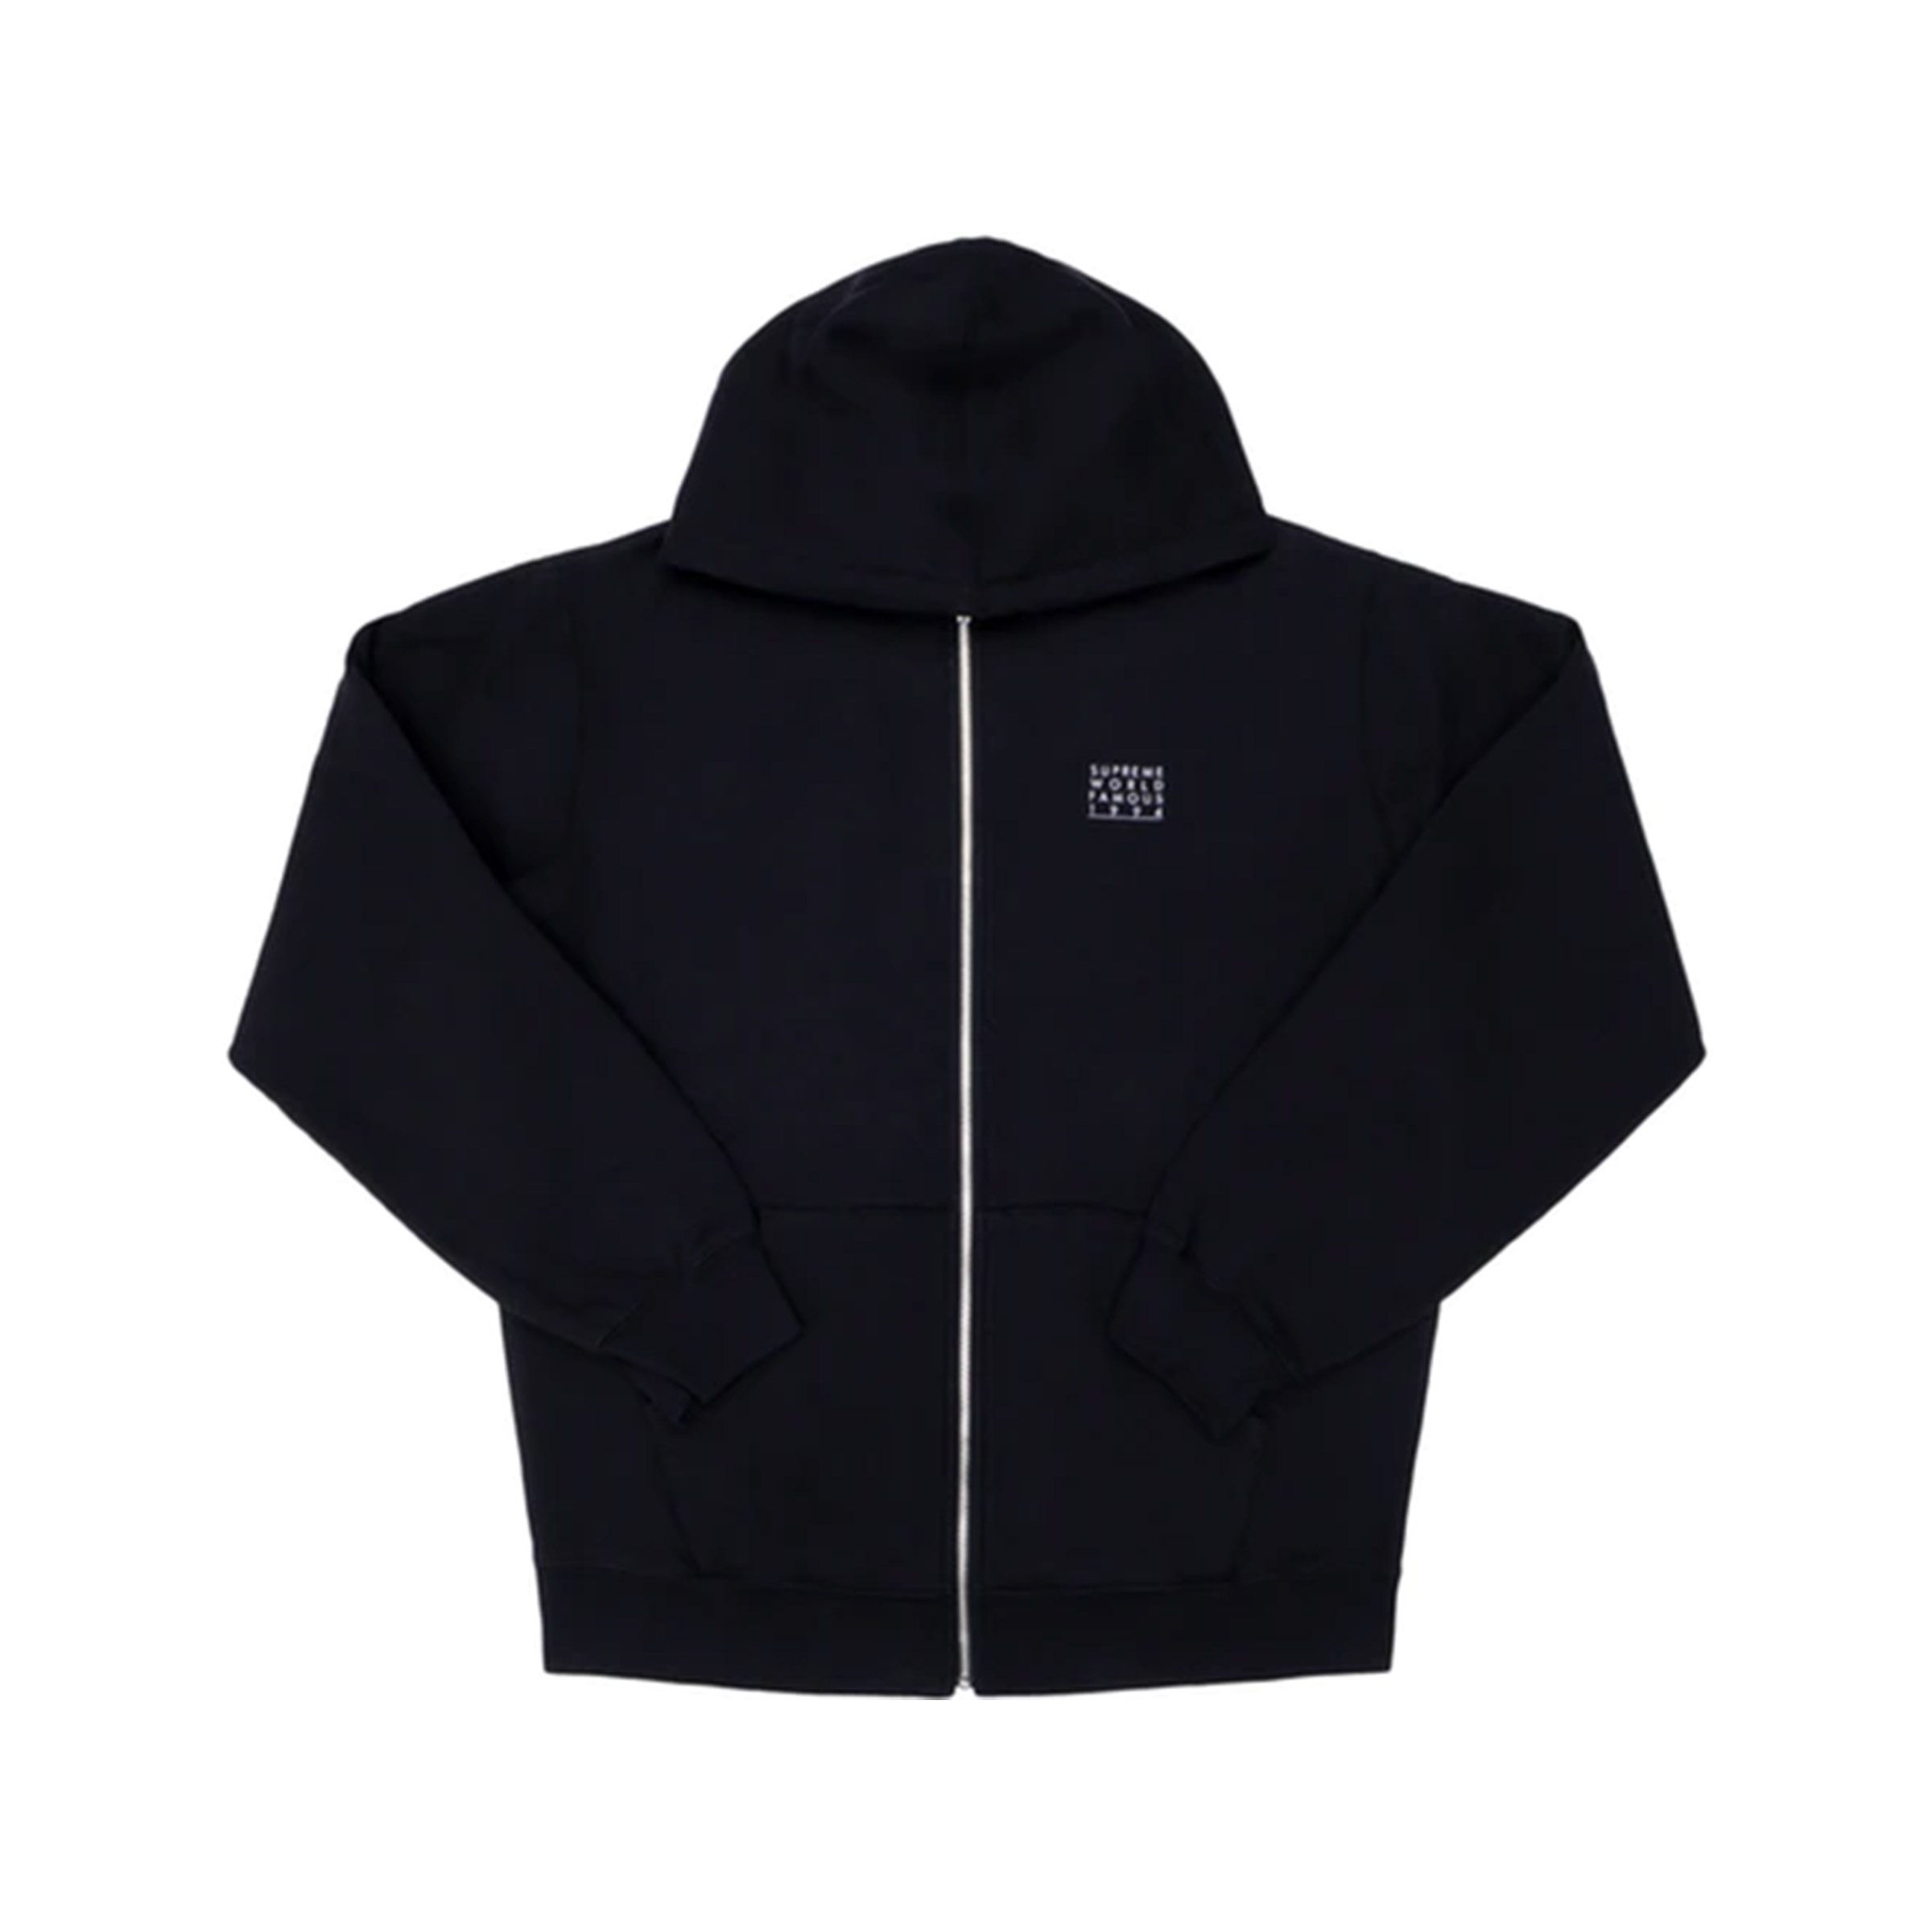 Supreme World Famous Zip Up Hooded Sweatshirt Black - SIGNL Shop